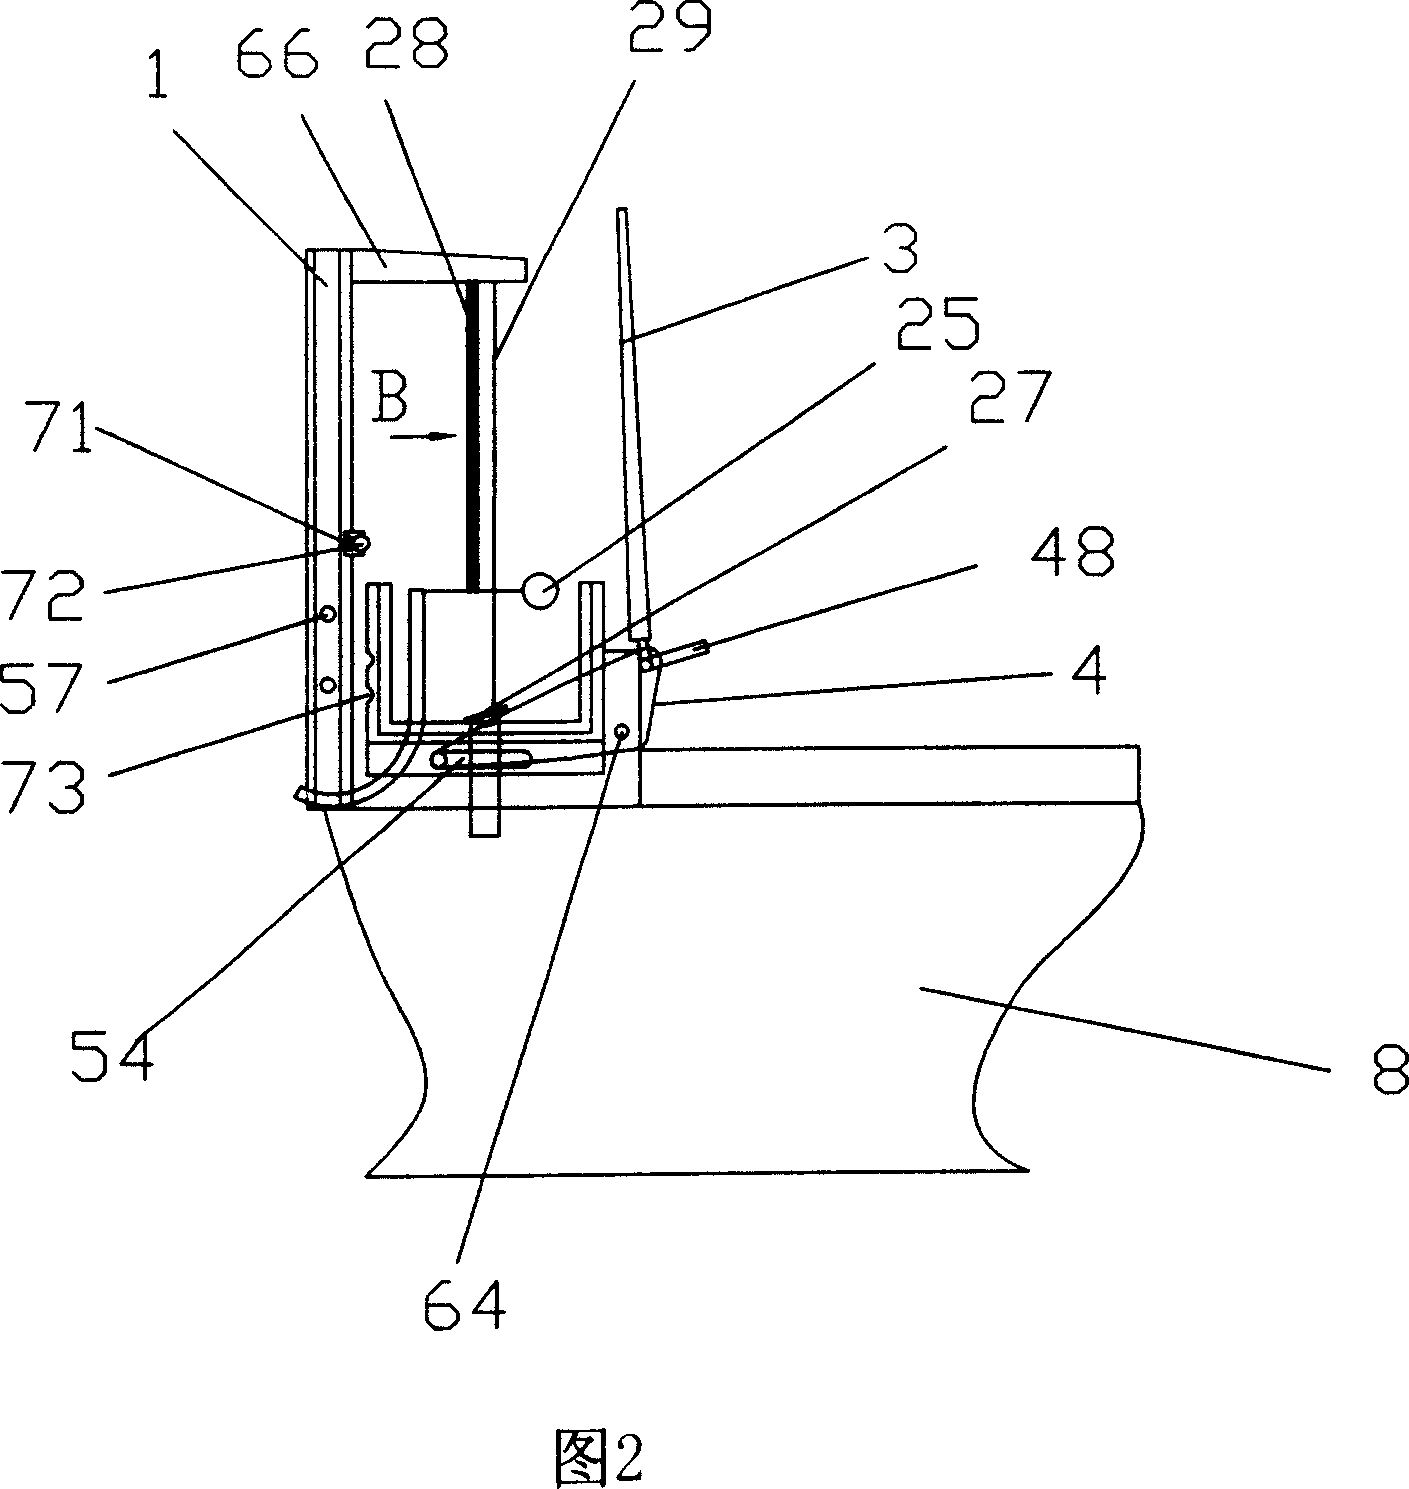 Complex functional toilet closet mechanism